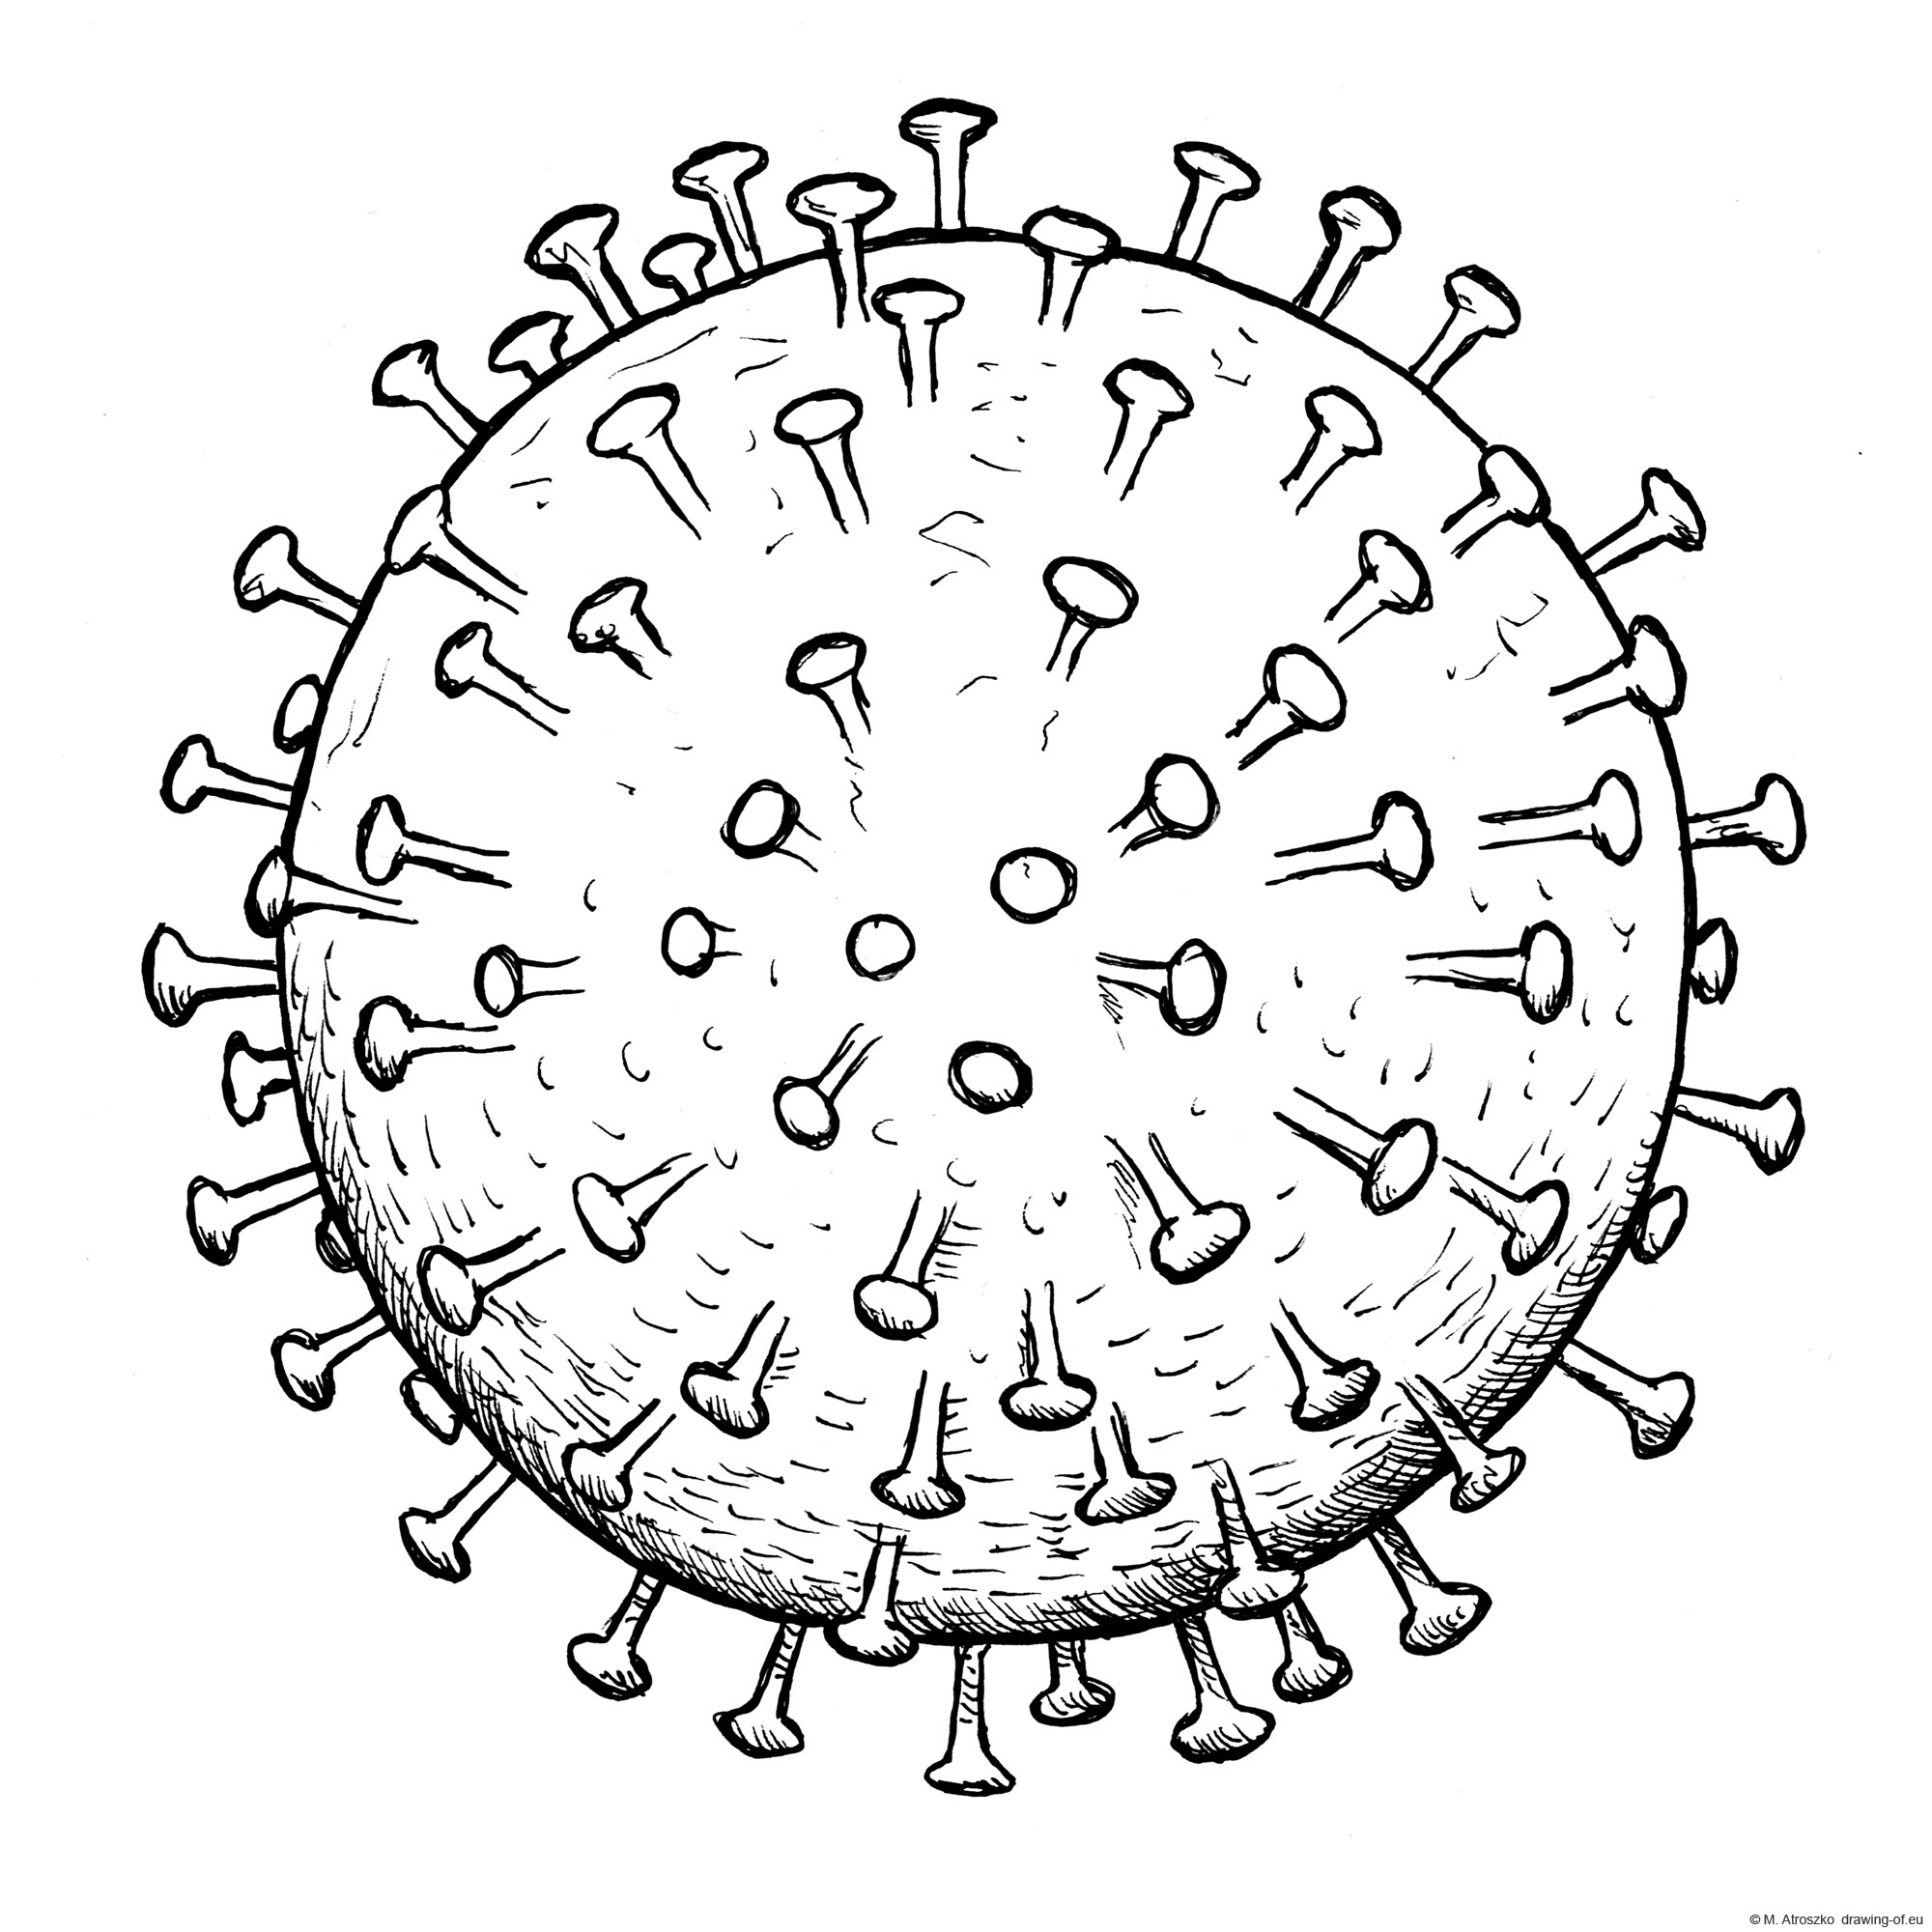 Coronavirus drawing